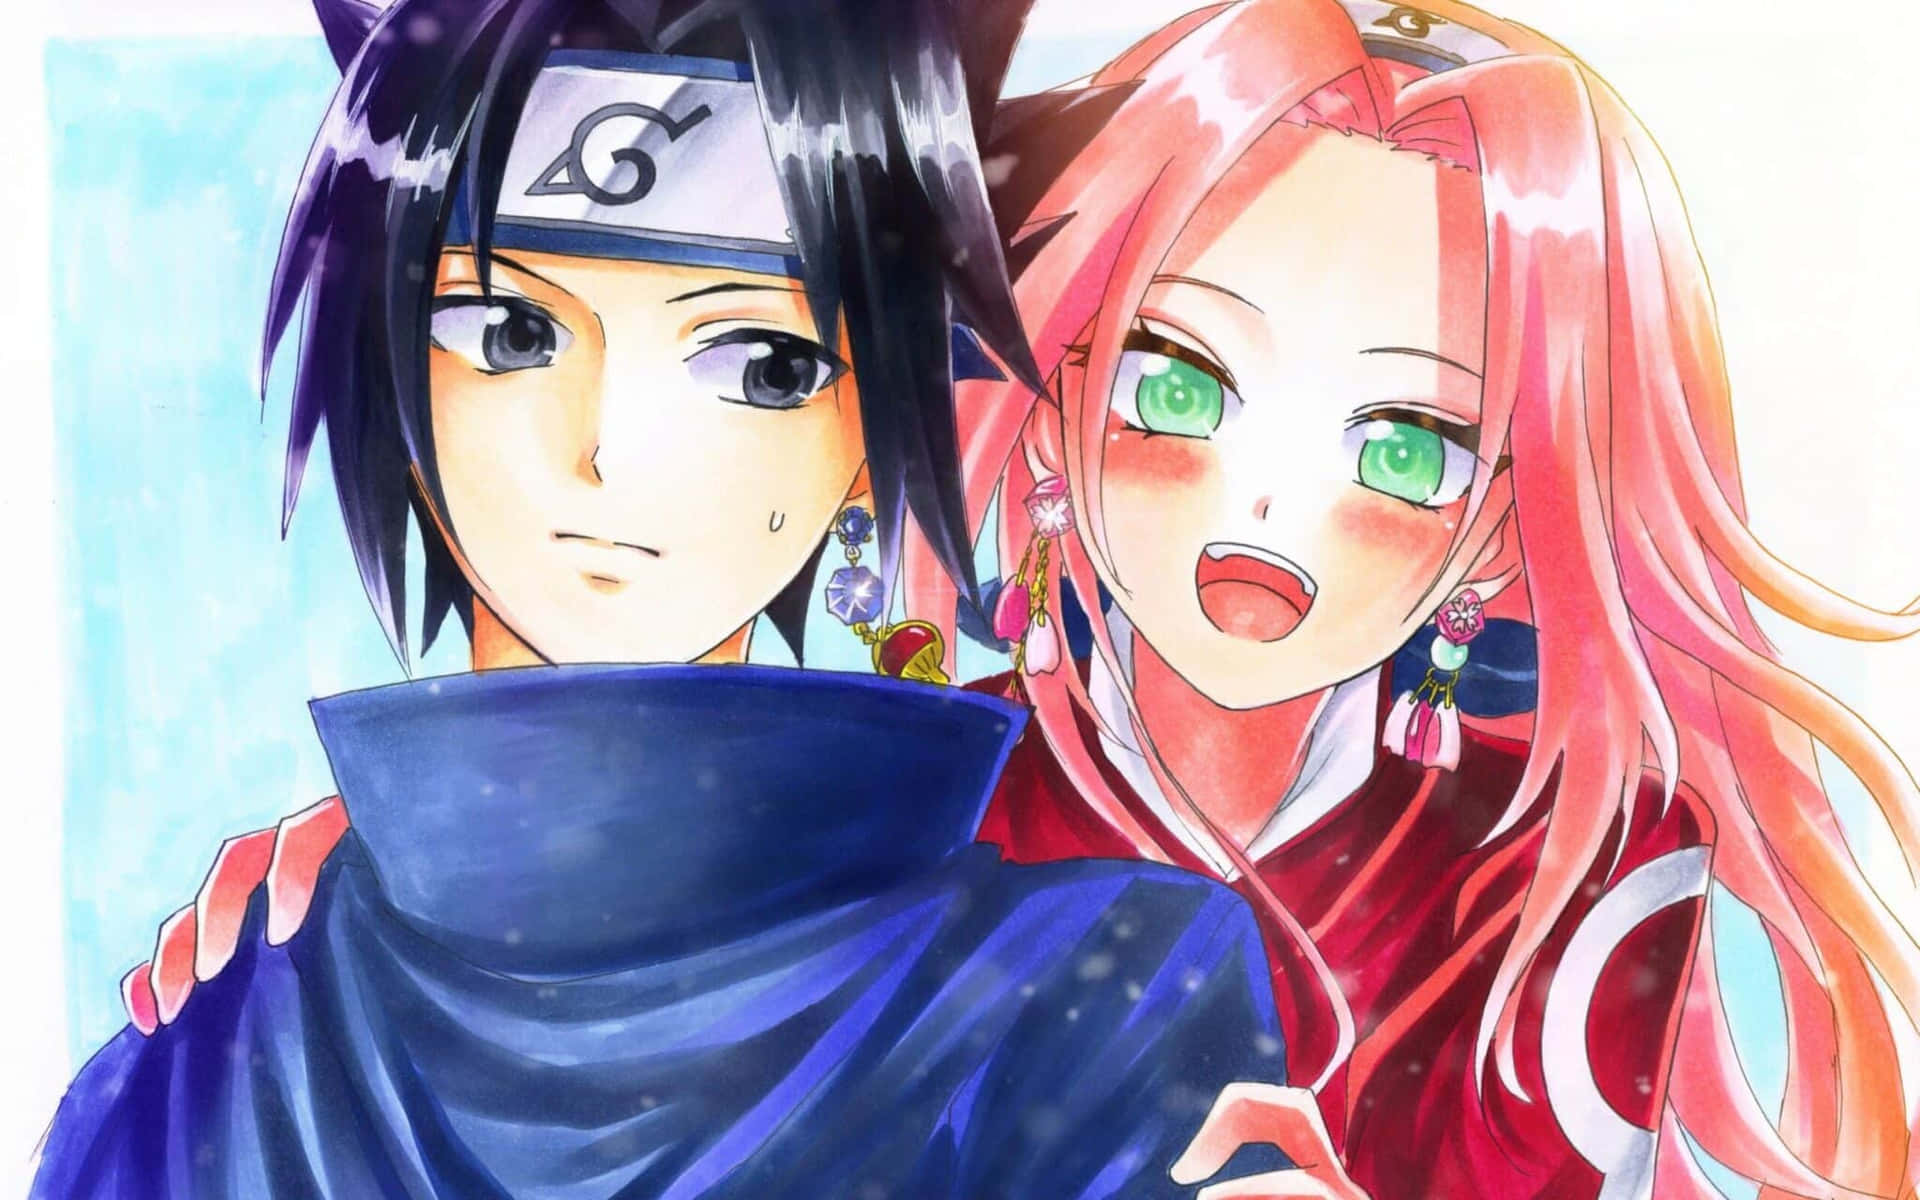 Sasuke Uchiha, en af de mest magtfulde ninjas i Naruto-universet.